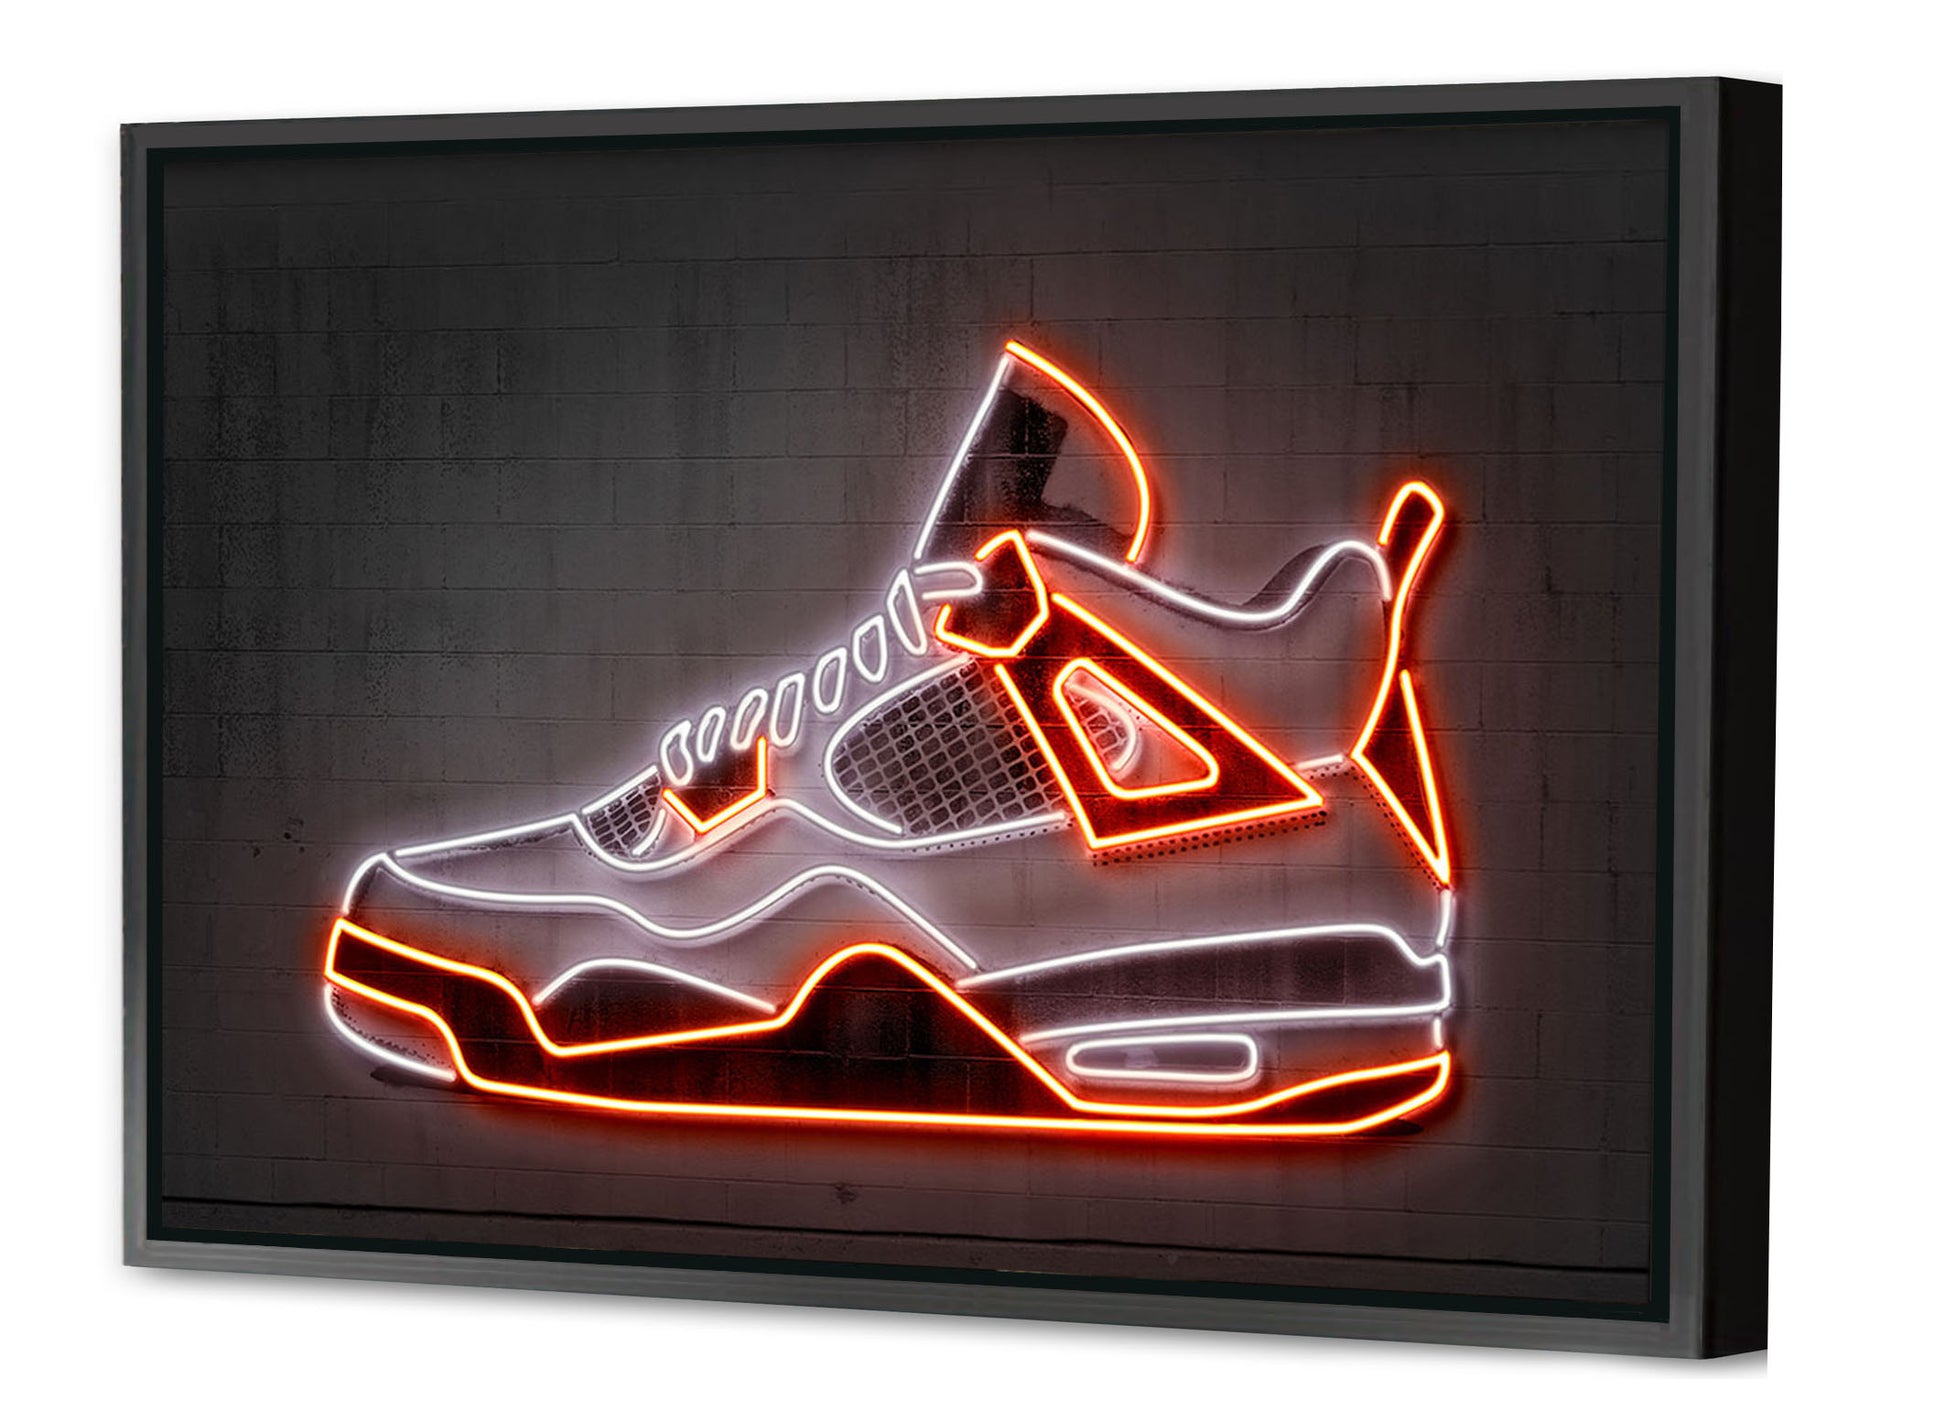 Air Jordan 4-neon-art, print-Canvas Print with Box Frame-40 x 60 cm-BLUE SHAKER